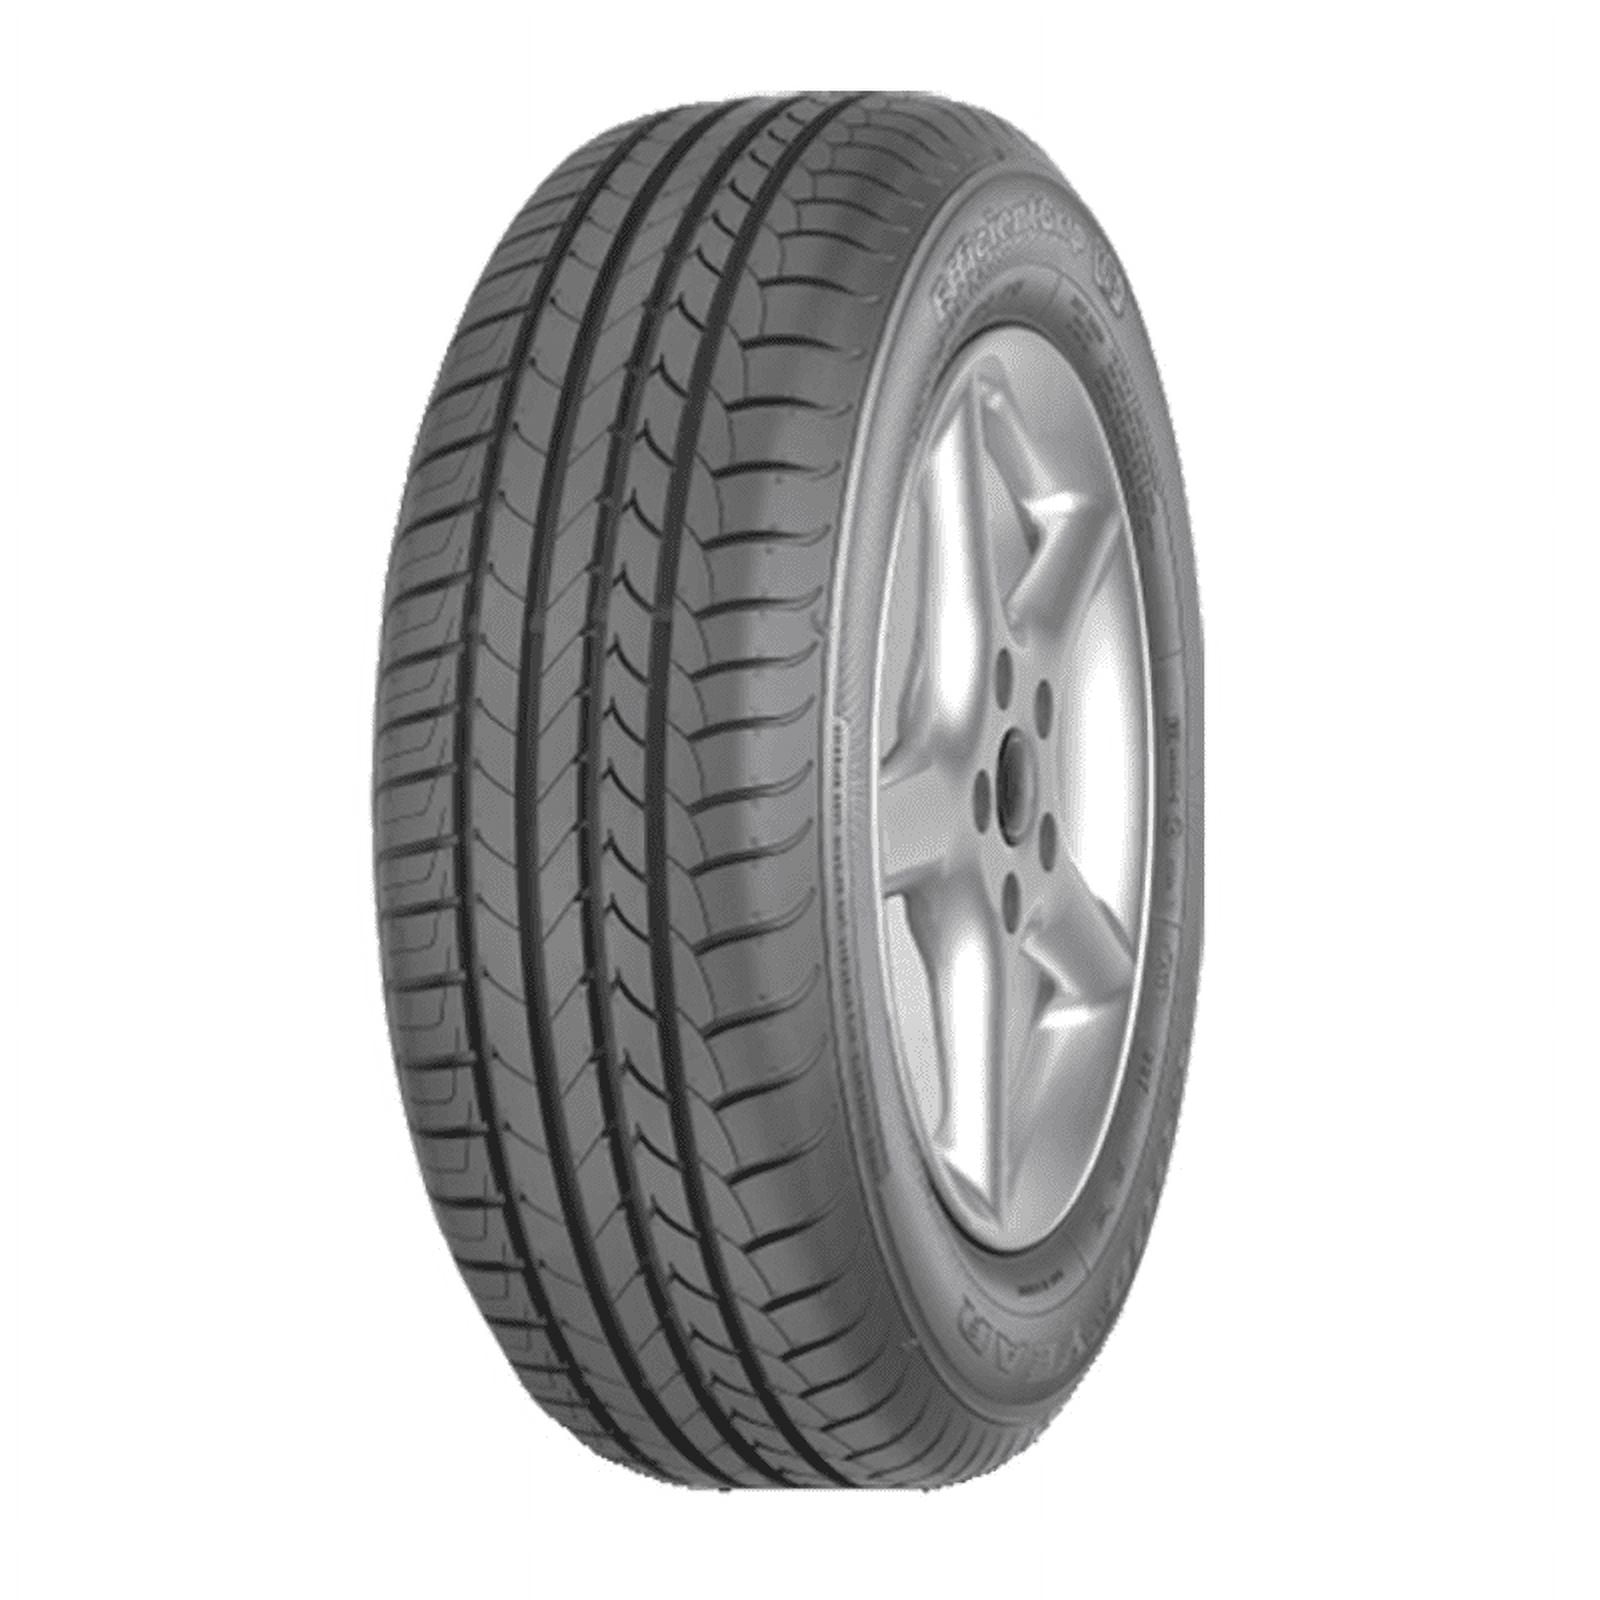 Goodyear EfficientGrip Performance 215/60R17 96 H Tire